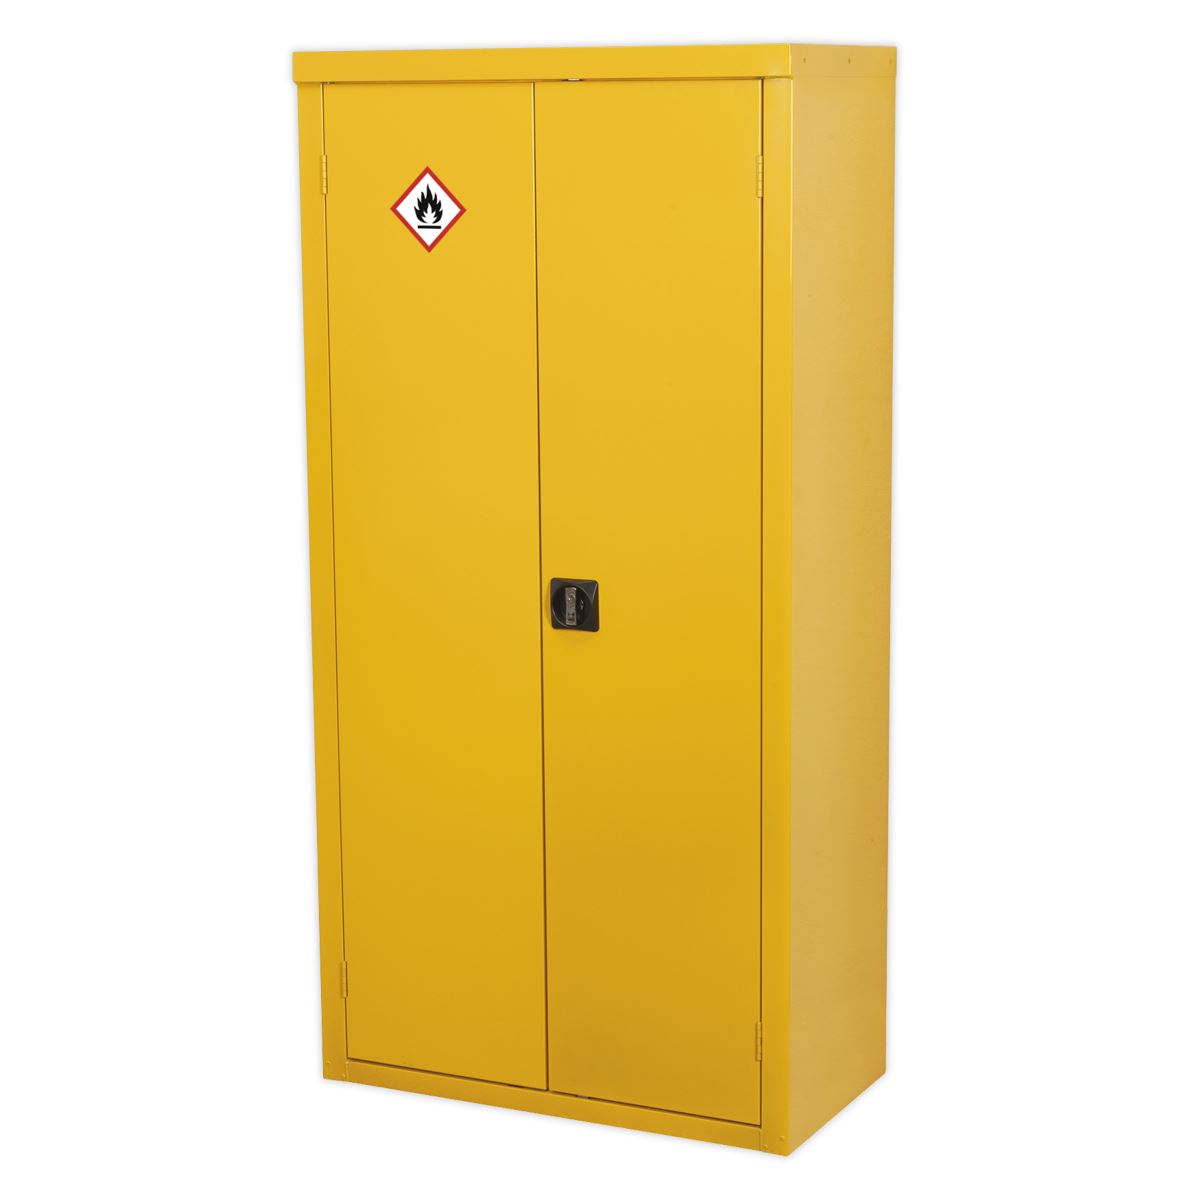 Sealey Hazardous Substance Cabinet 900 x 460 x 1800mm FSC03